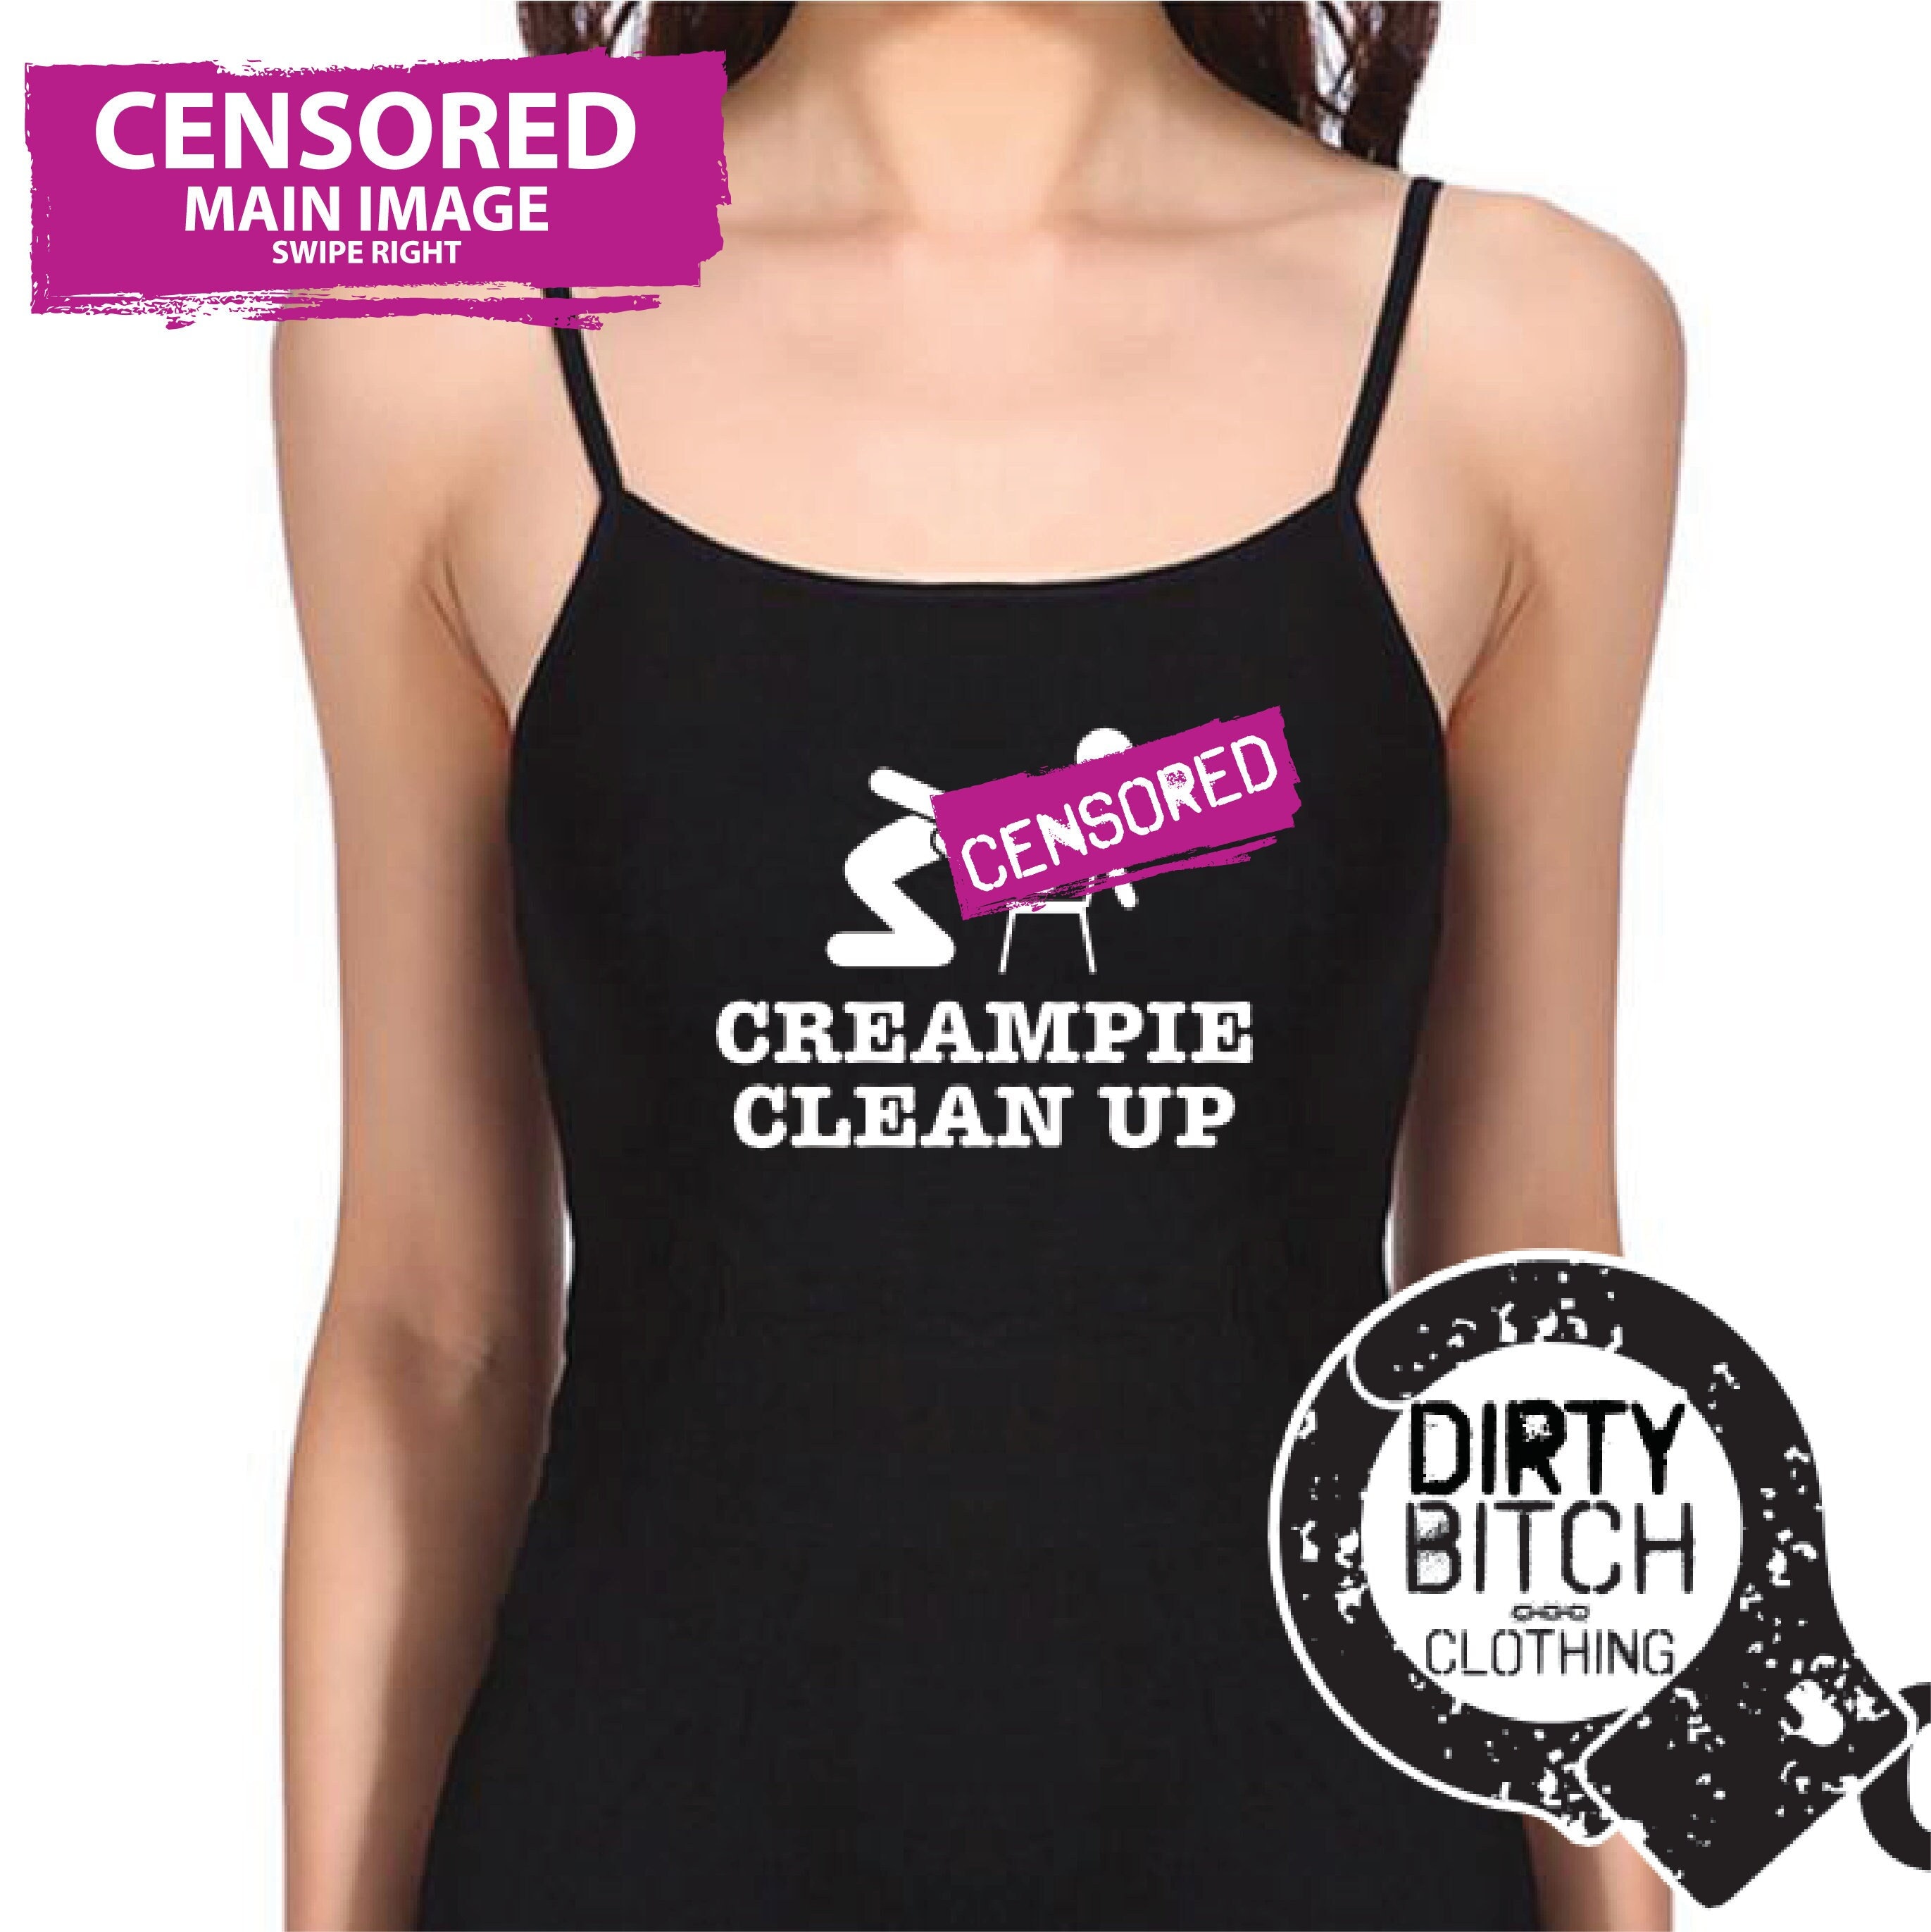 Creampie Clean up Adult Vest Top Clothing Fetish Bdsm photo pic